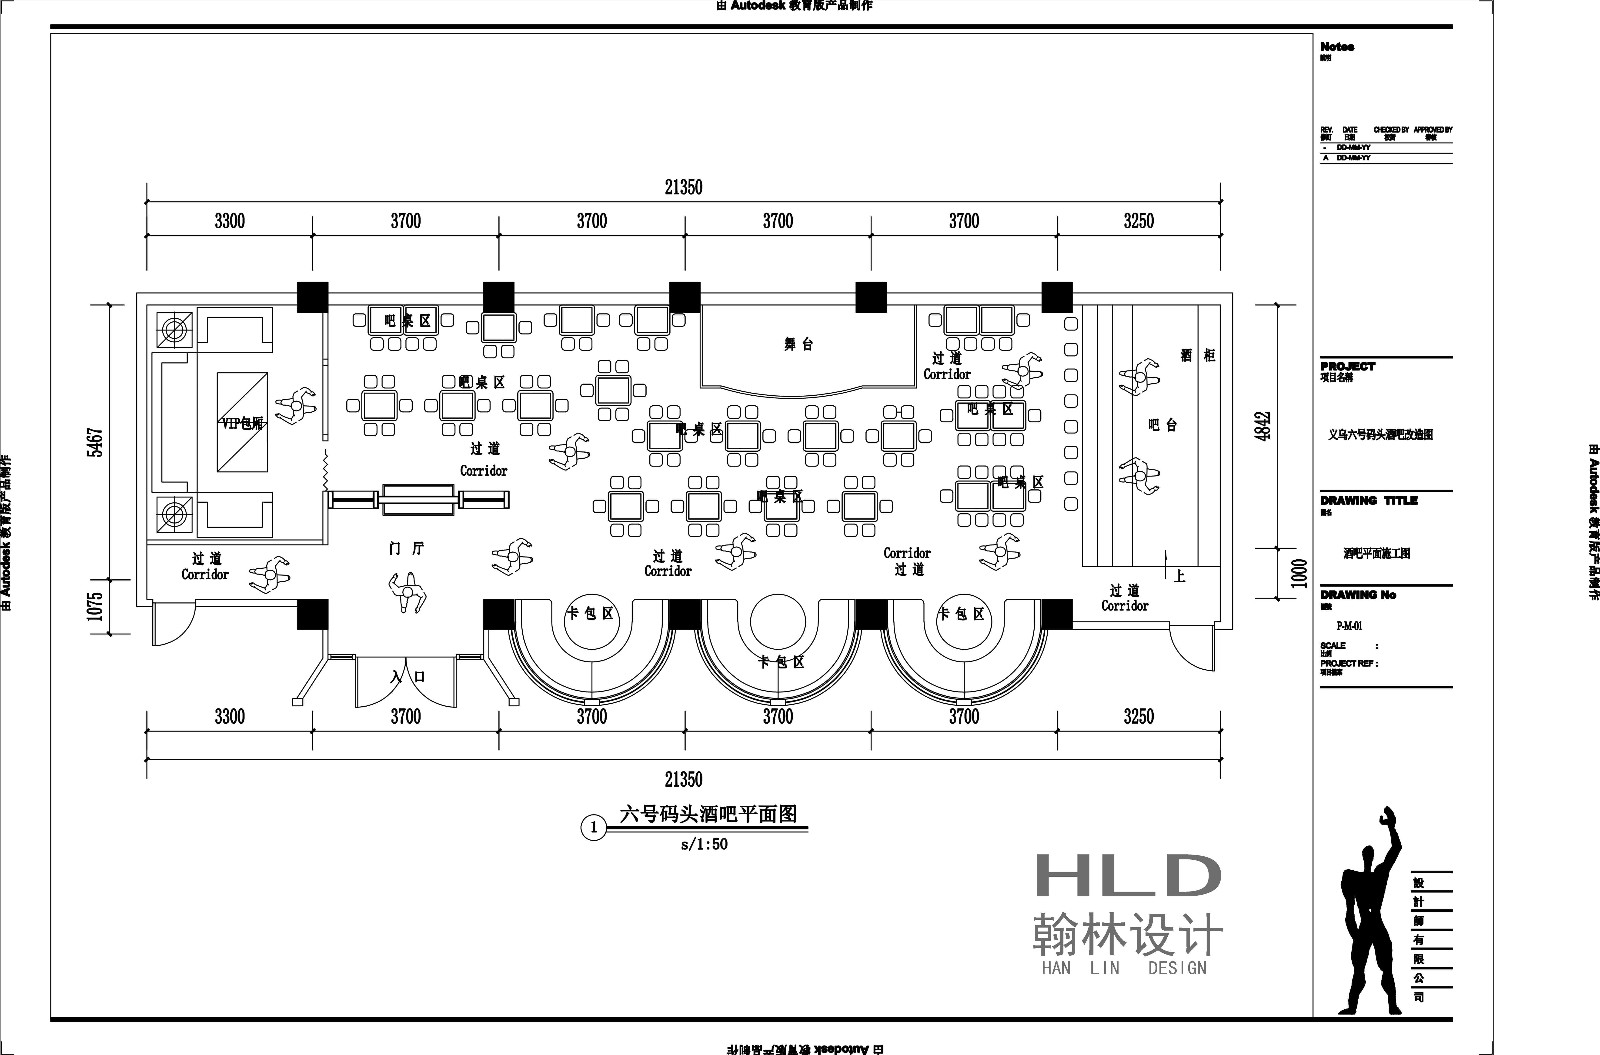 【HC-WK88-H132-55B】RJ55单口半包-深圳市虹成电子有限公司